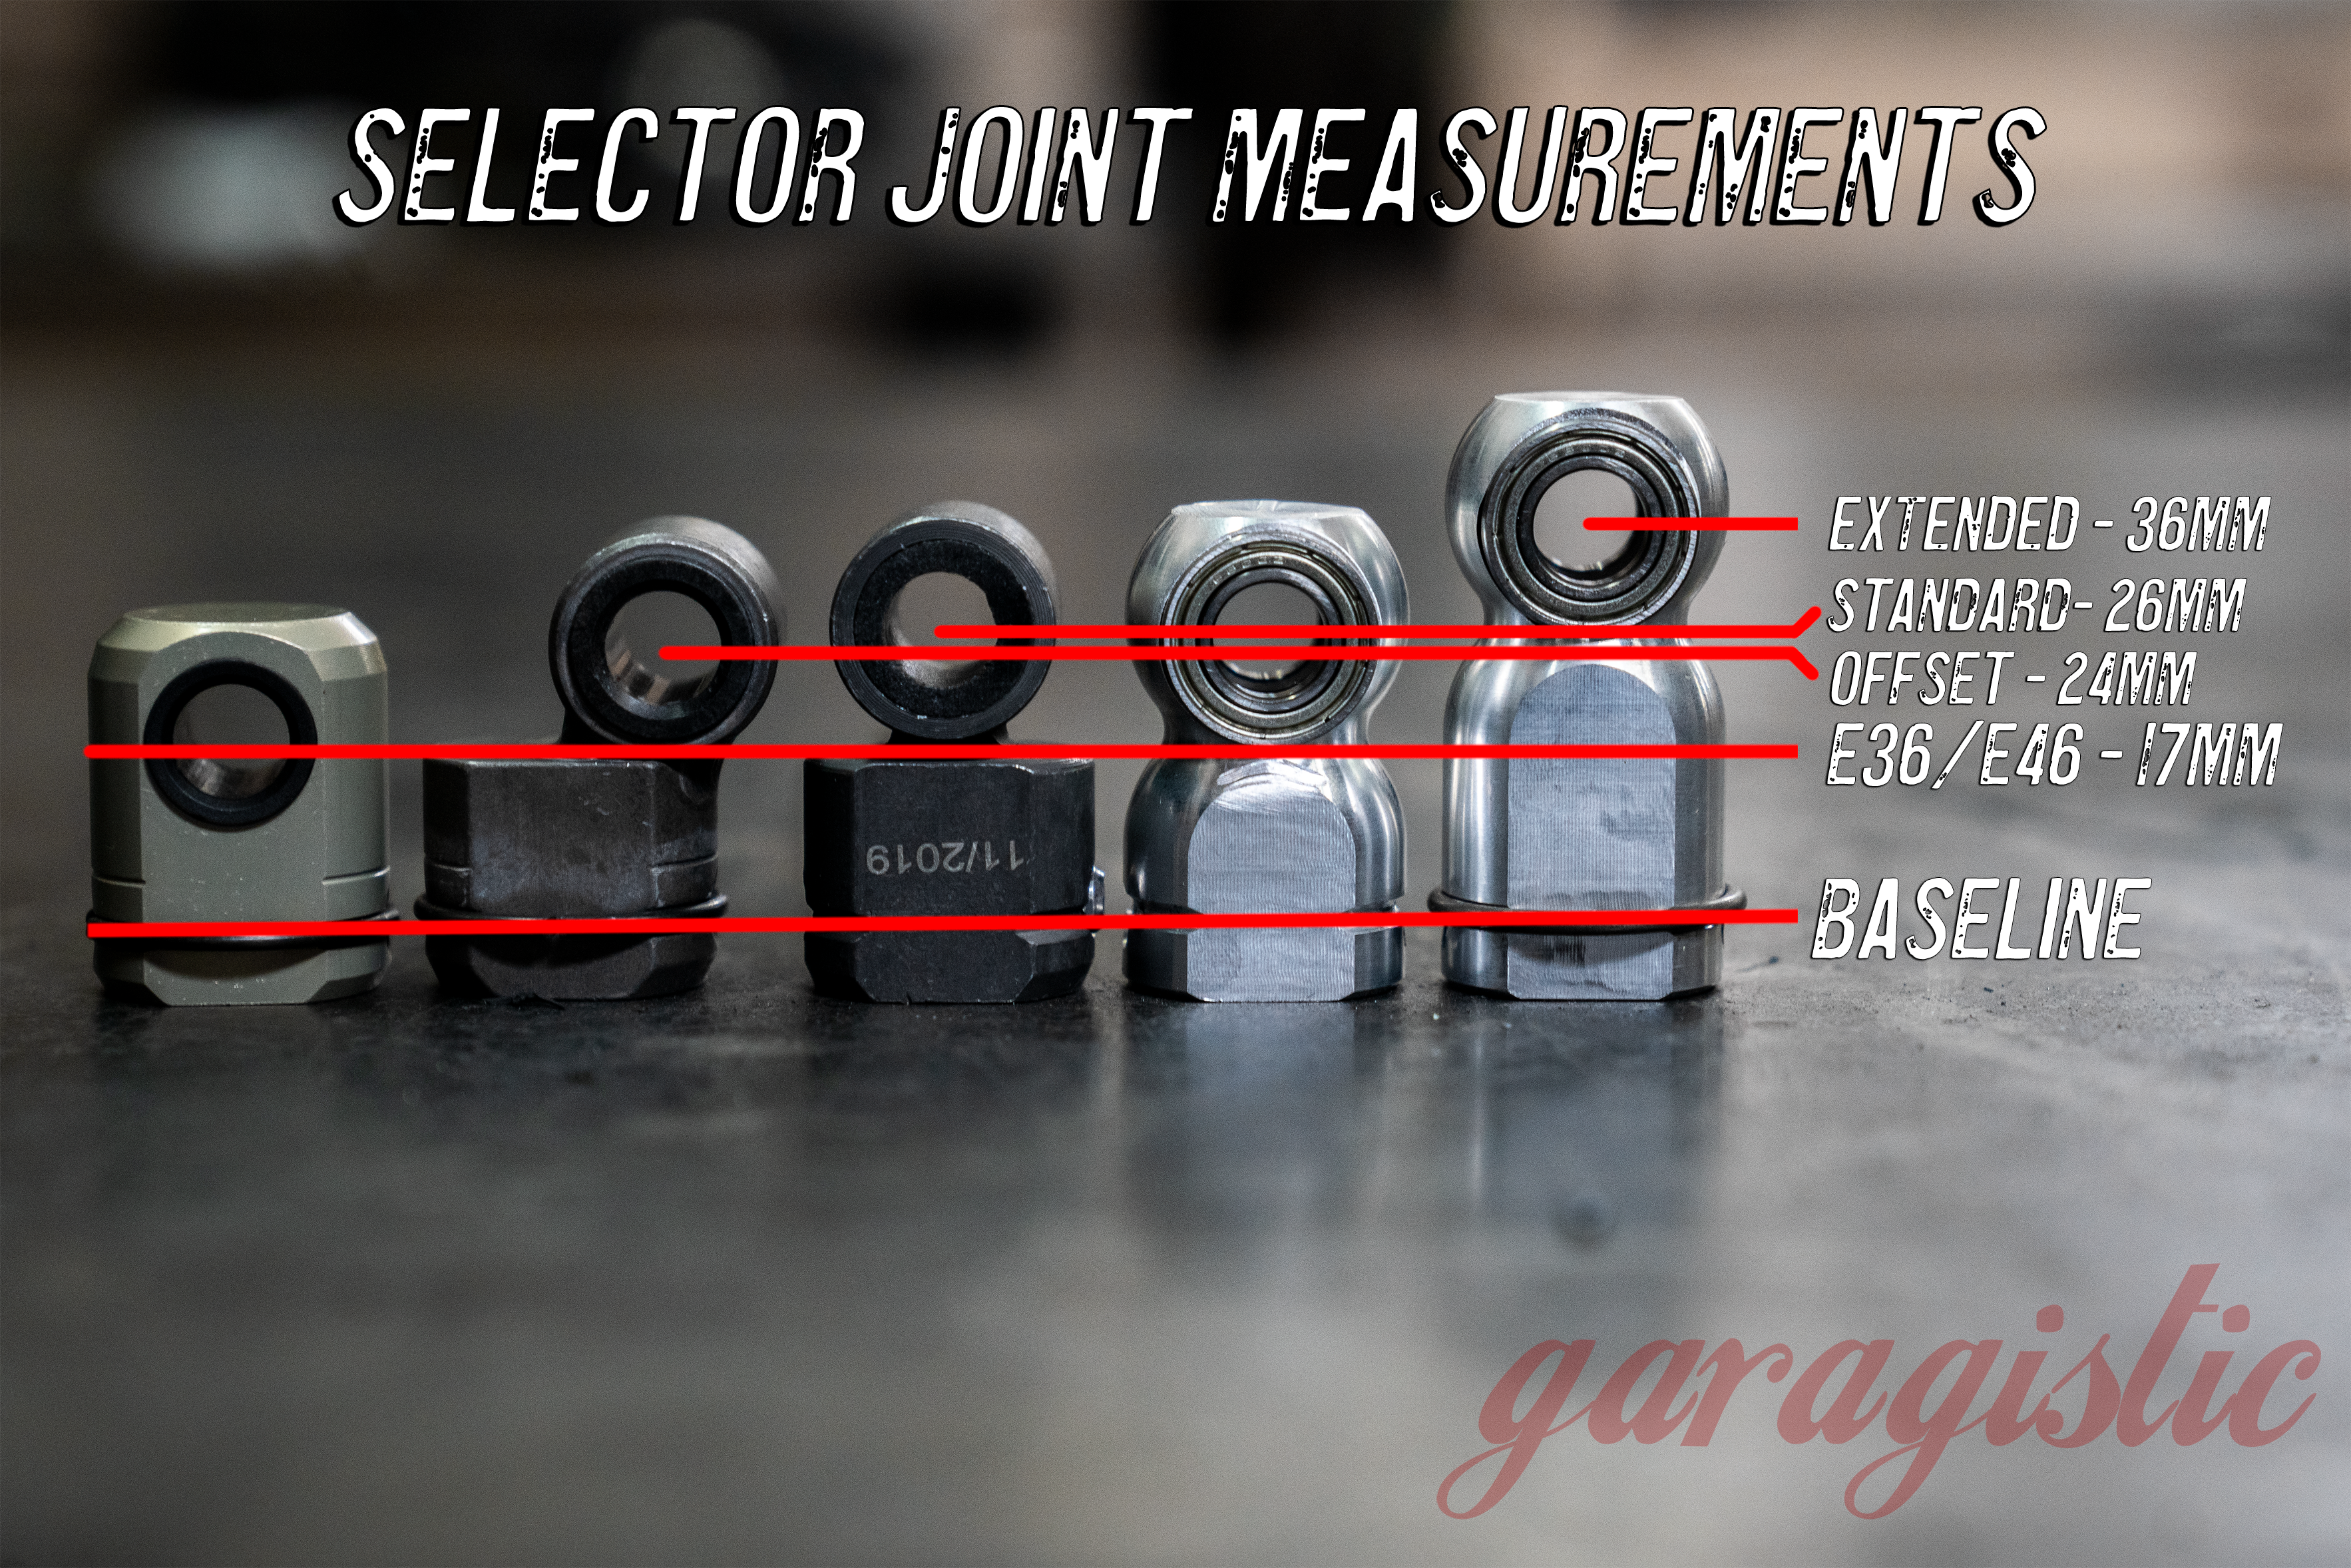 Selector_Joint_Measurements_Garagistic.png